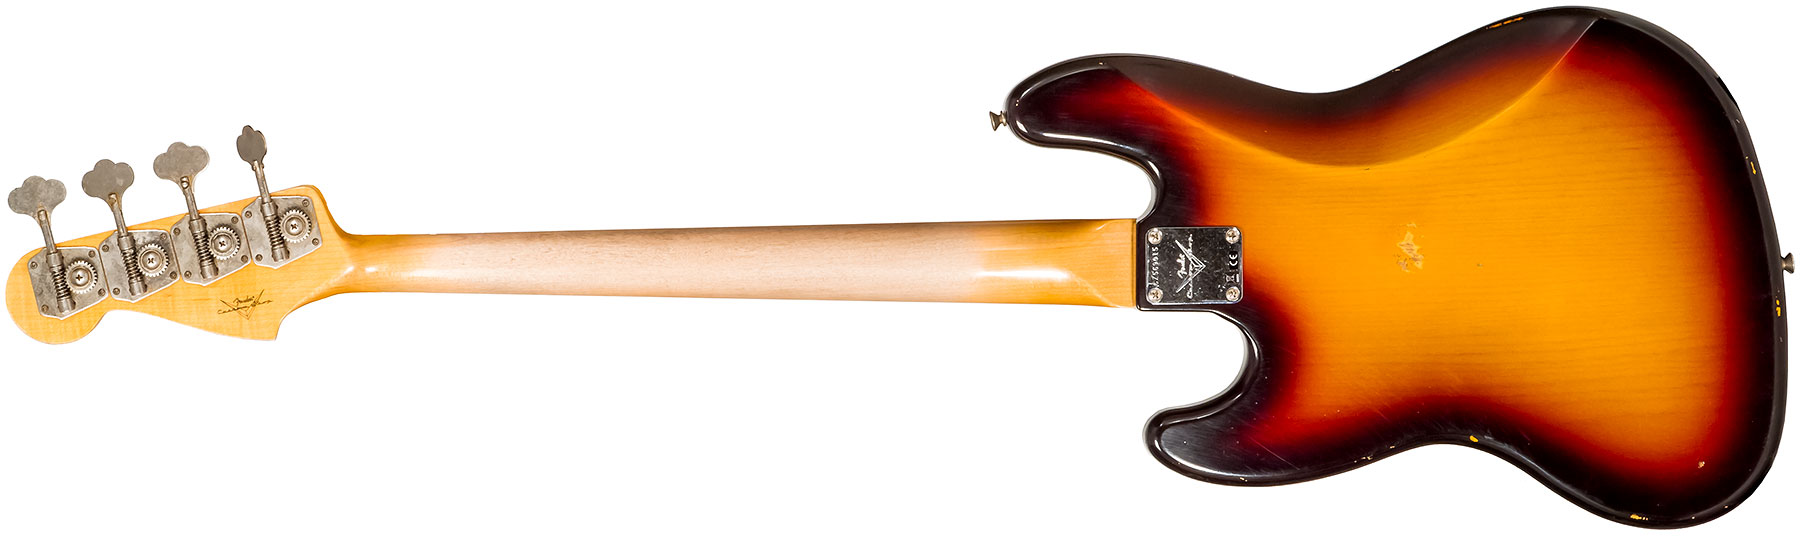 Fender Custom Shop  Jazz Bass 1962 Rw #cz569015 - Relic 3-color Sunburst - Solid body elektrische bas - Variation 1